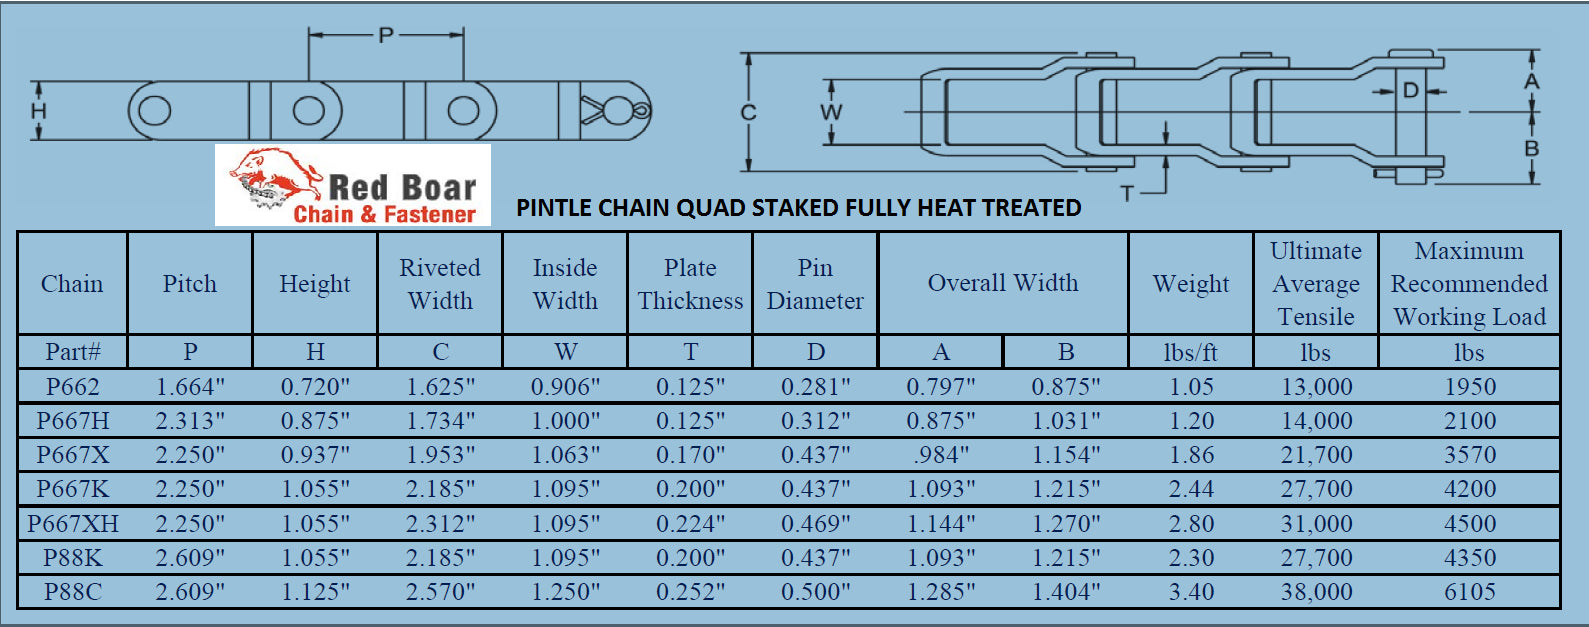 2.609" Pitch P88K Pintle Chain Spec Sheet